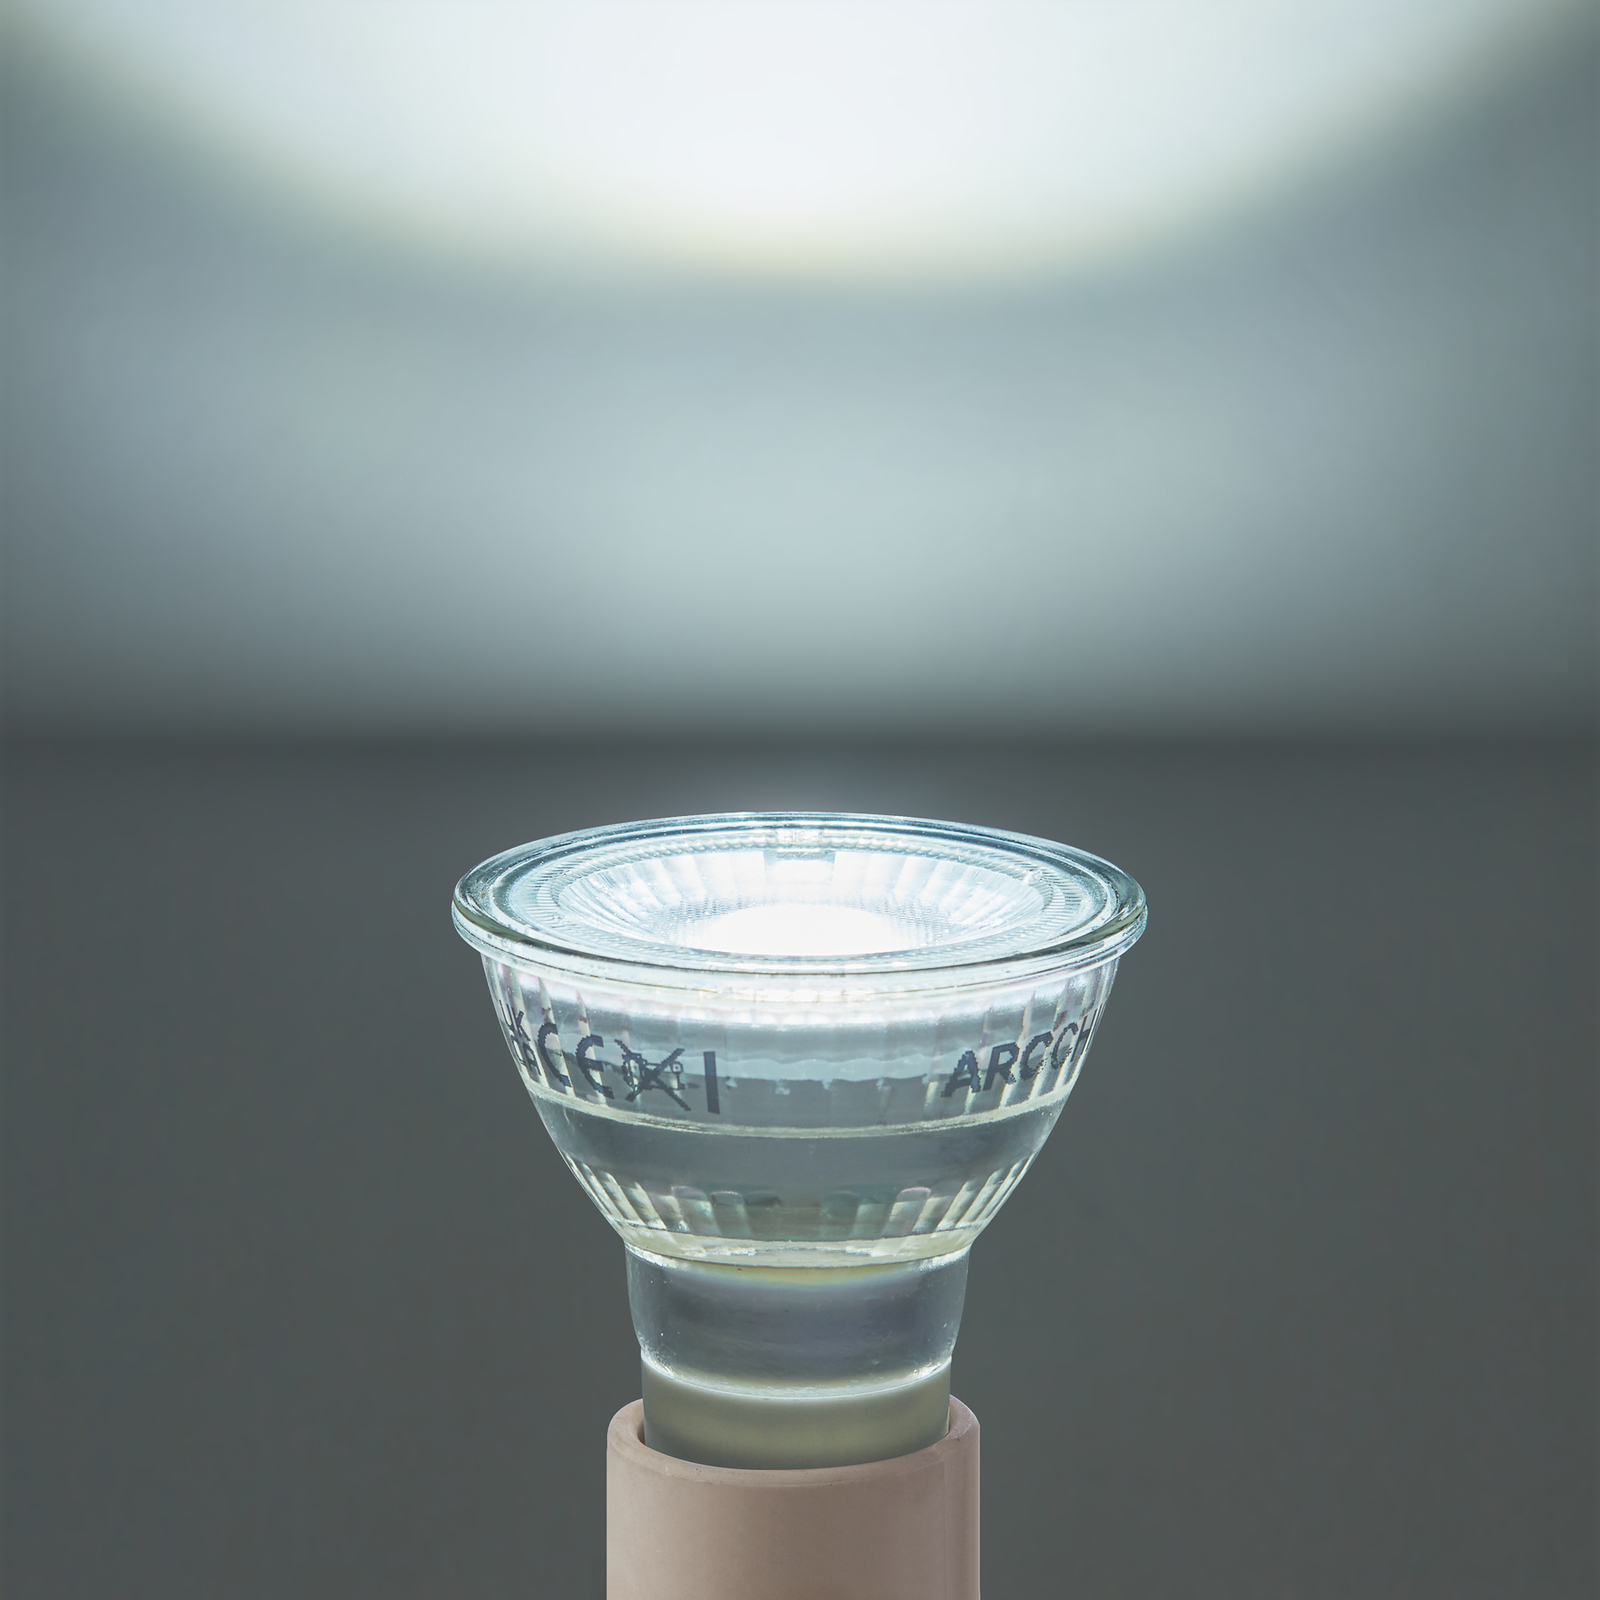 Arcchio LED spuldze GU10 2,5W 6500K 450lm, stikla komplekts 3 gab